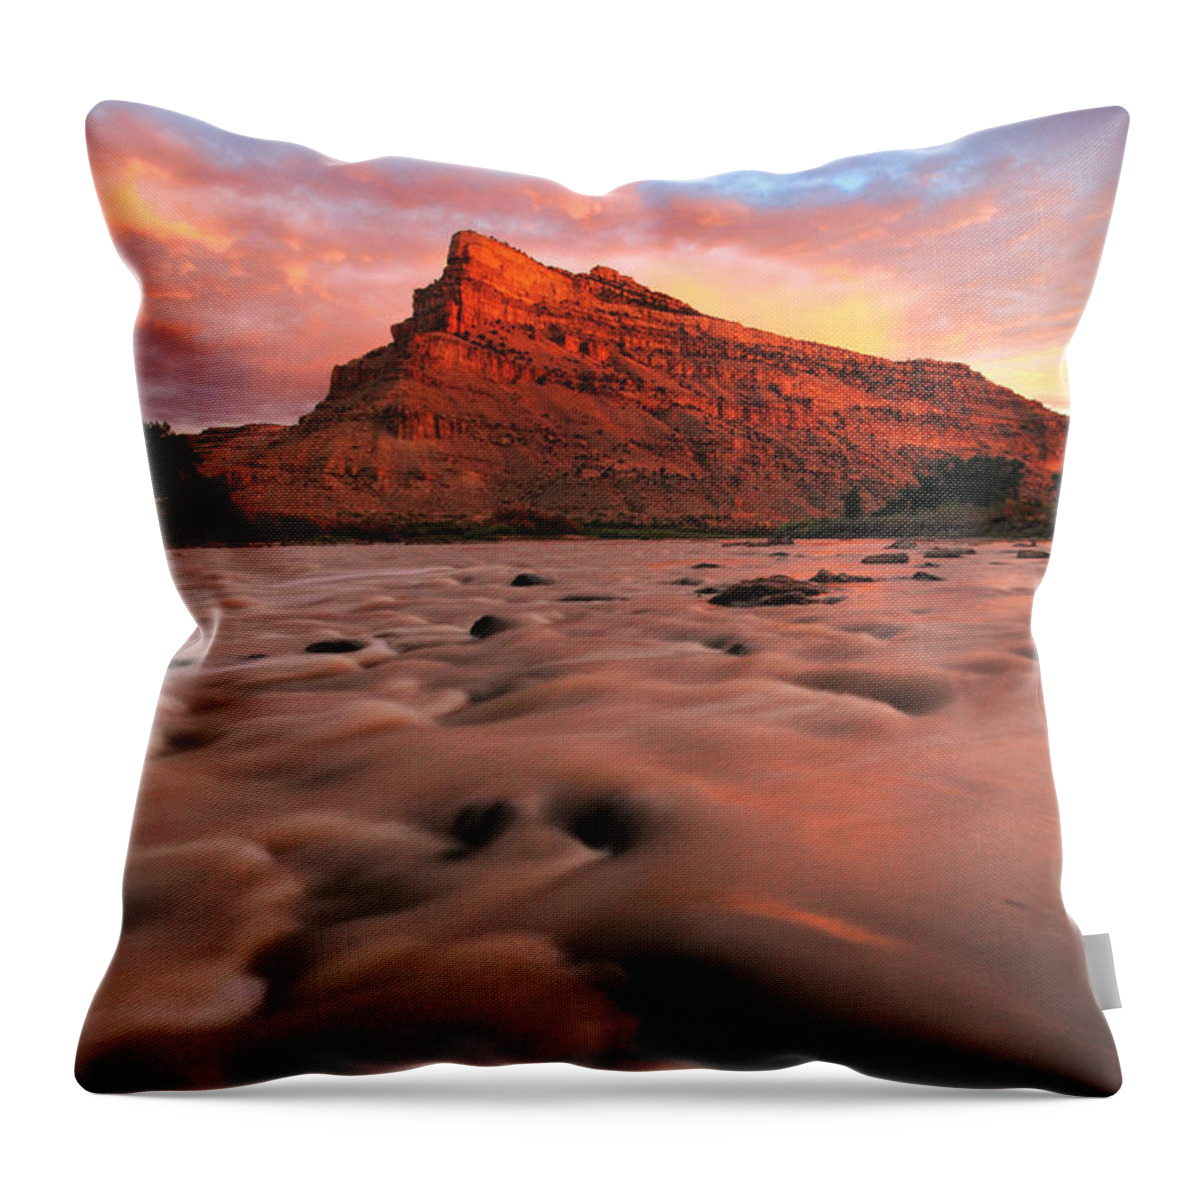 Colorado River Throw Pillow featuring the photograph A Chocolate Milk River by Ronda Kimbrow